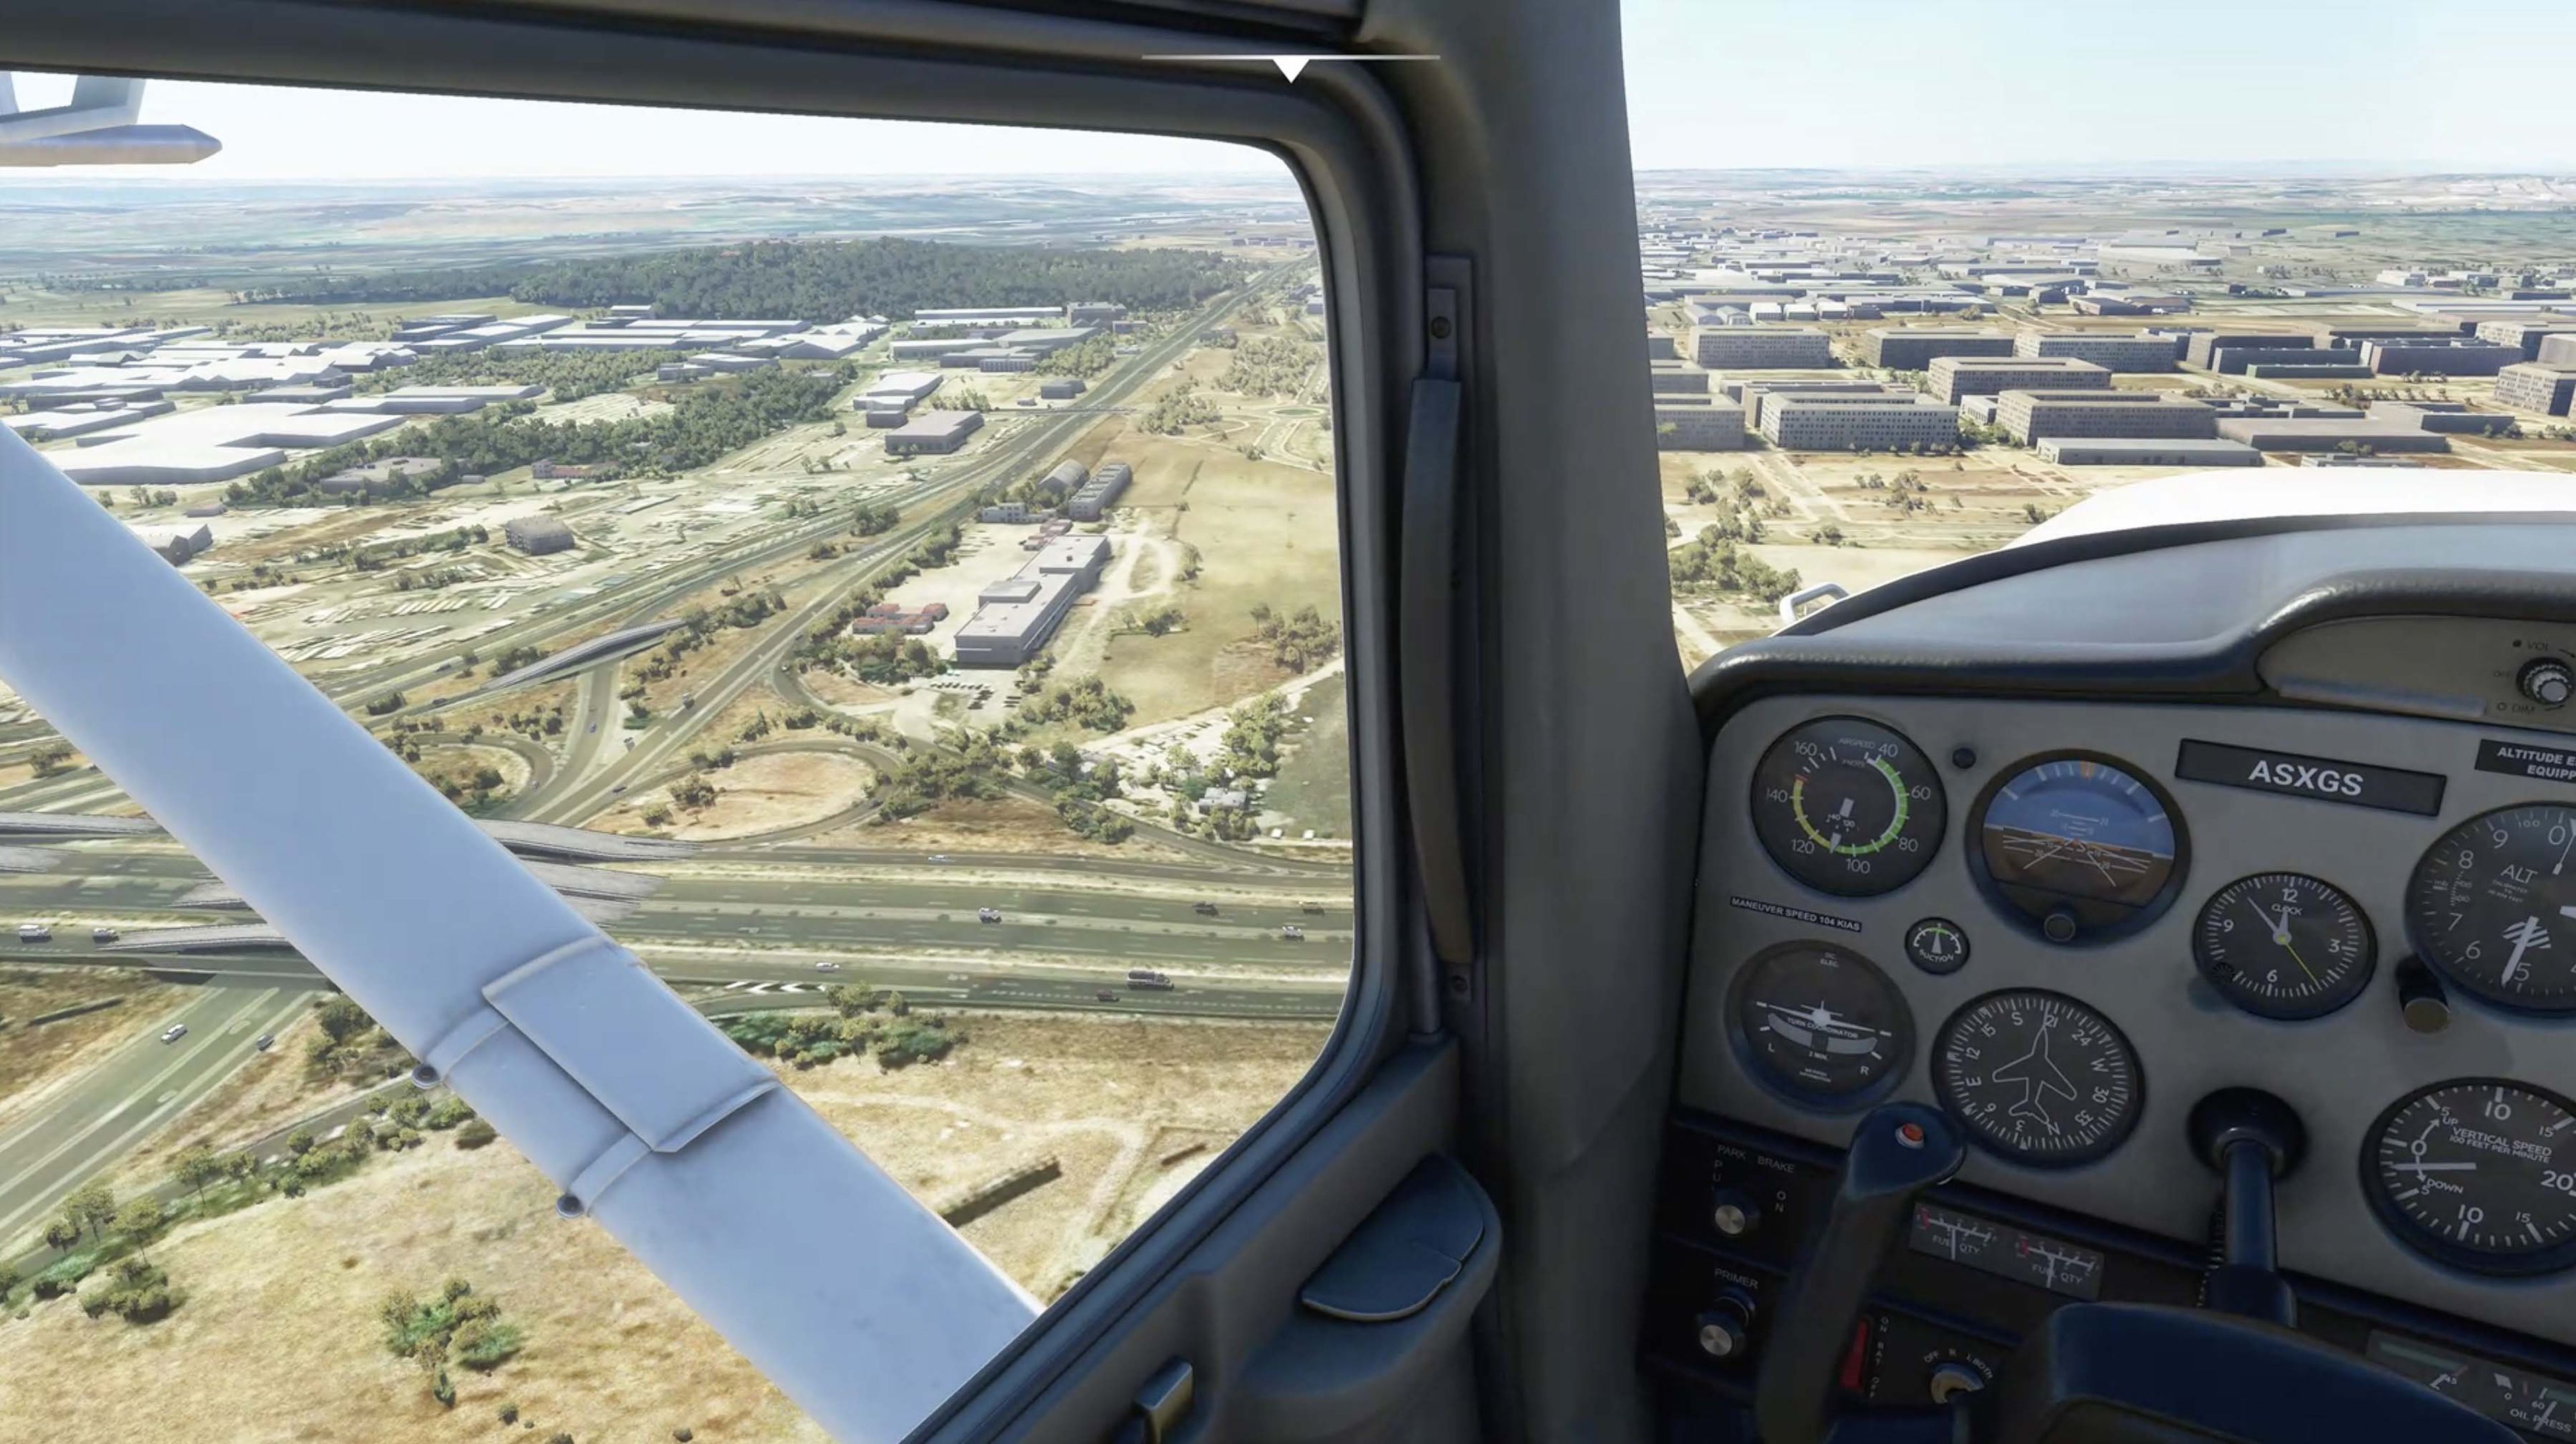 Análisis Flight Simulator